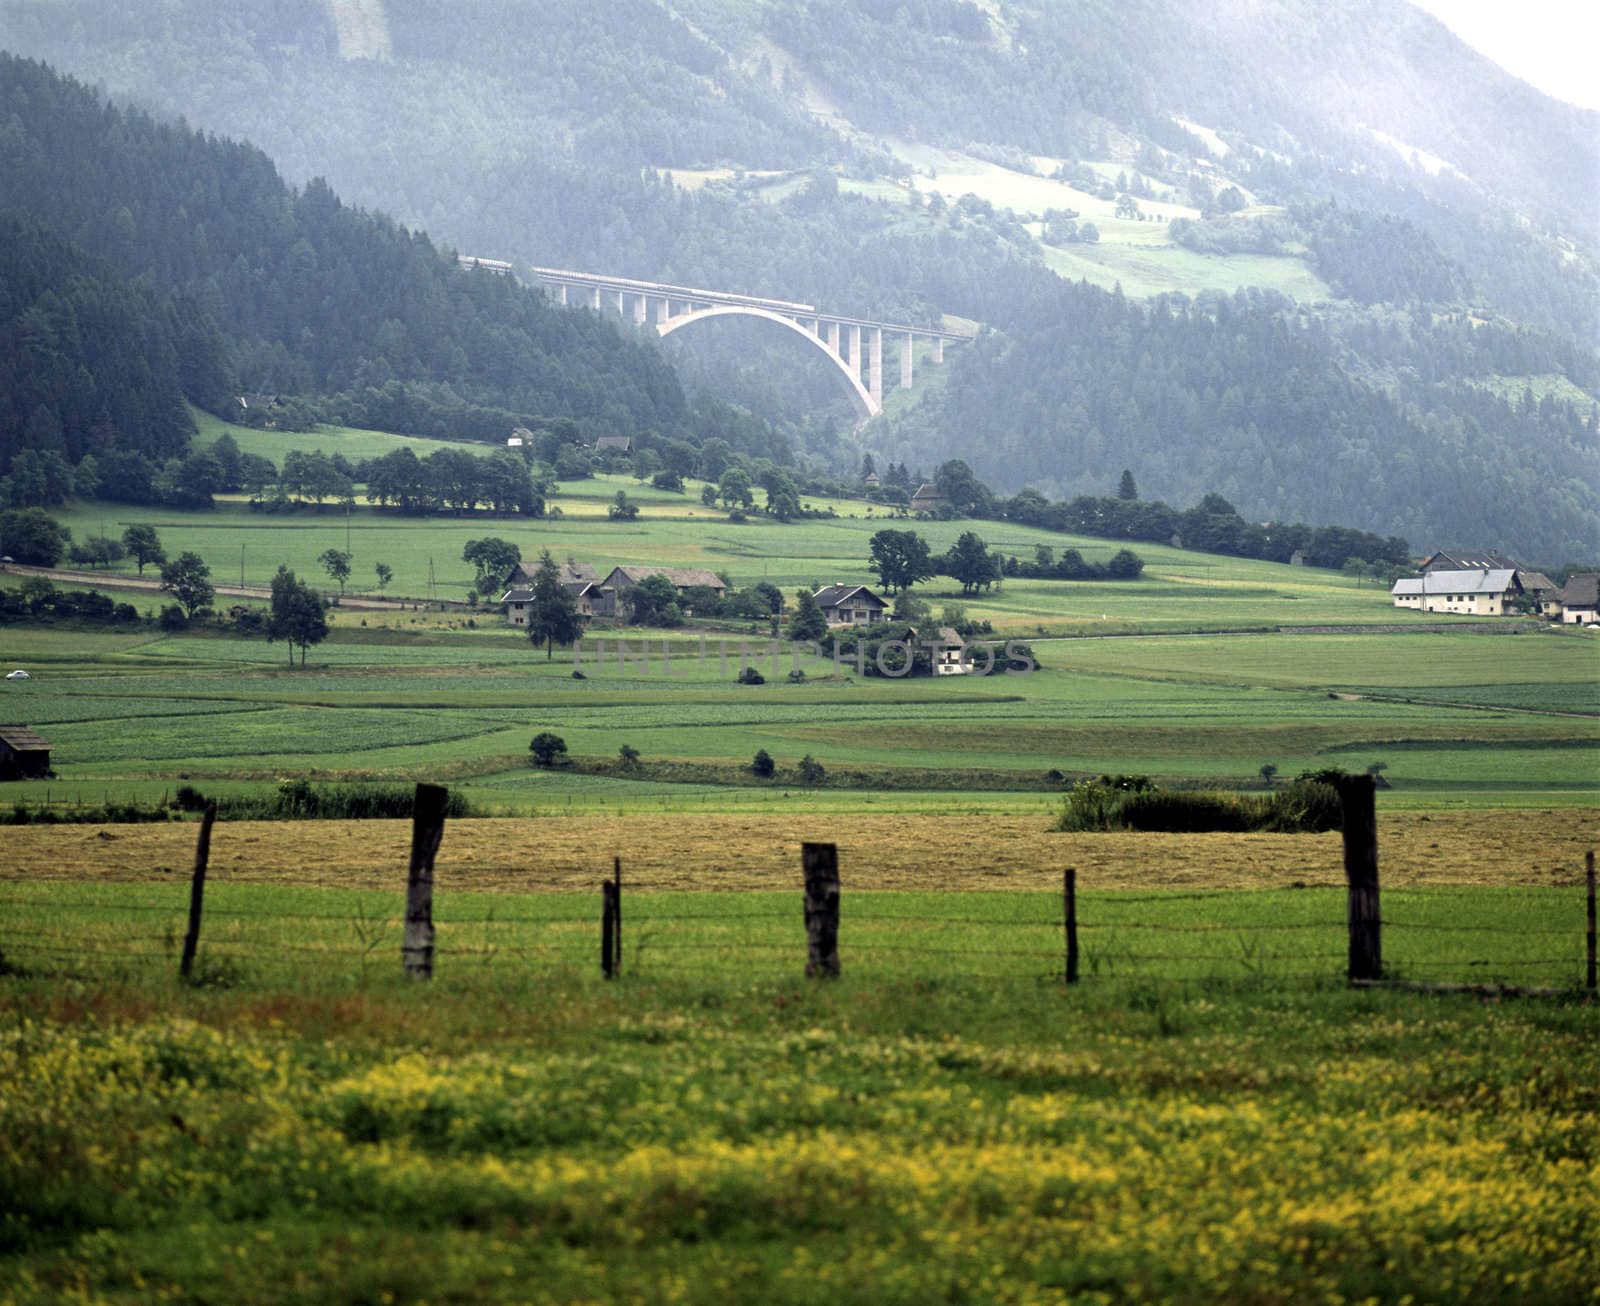 Austrian scenery